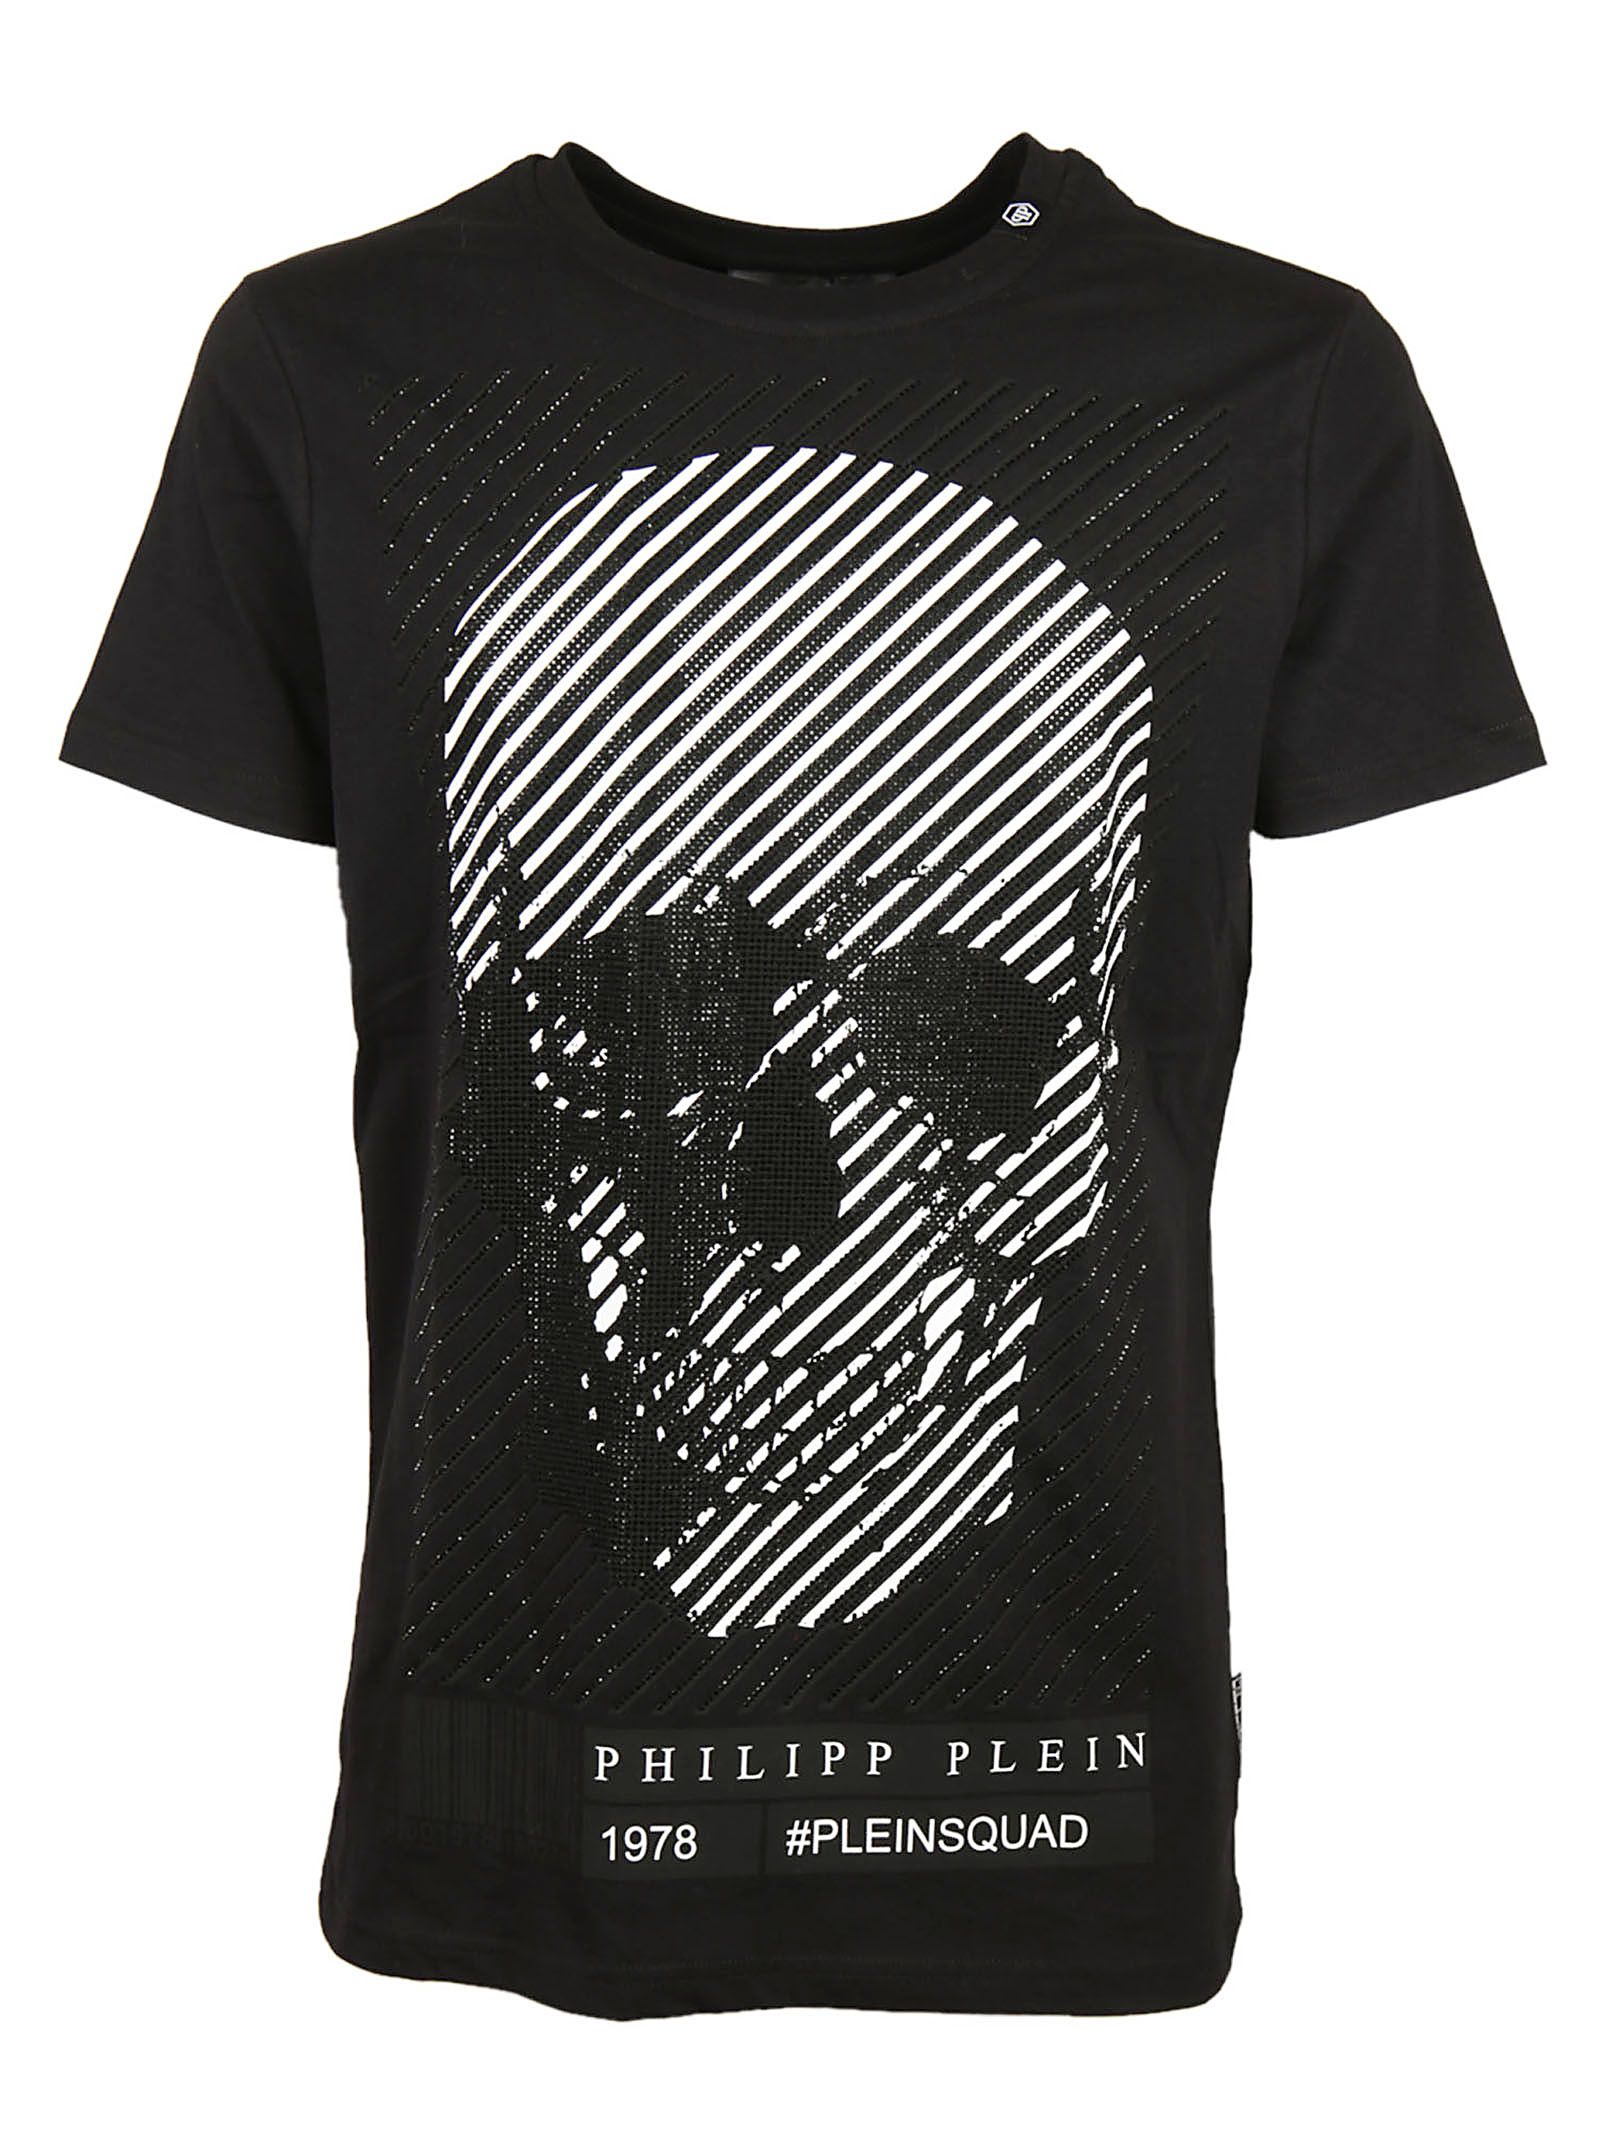 Buy philipp plein t shirt - 63% OFF!